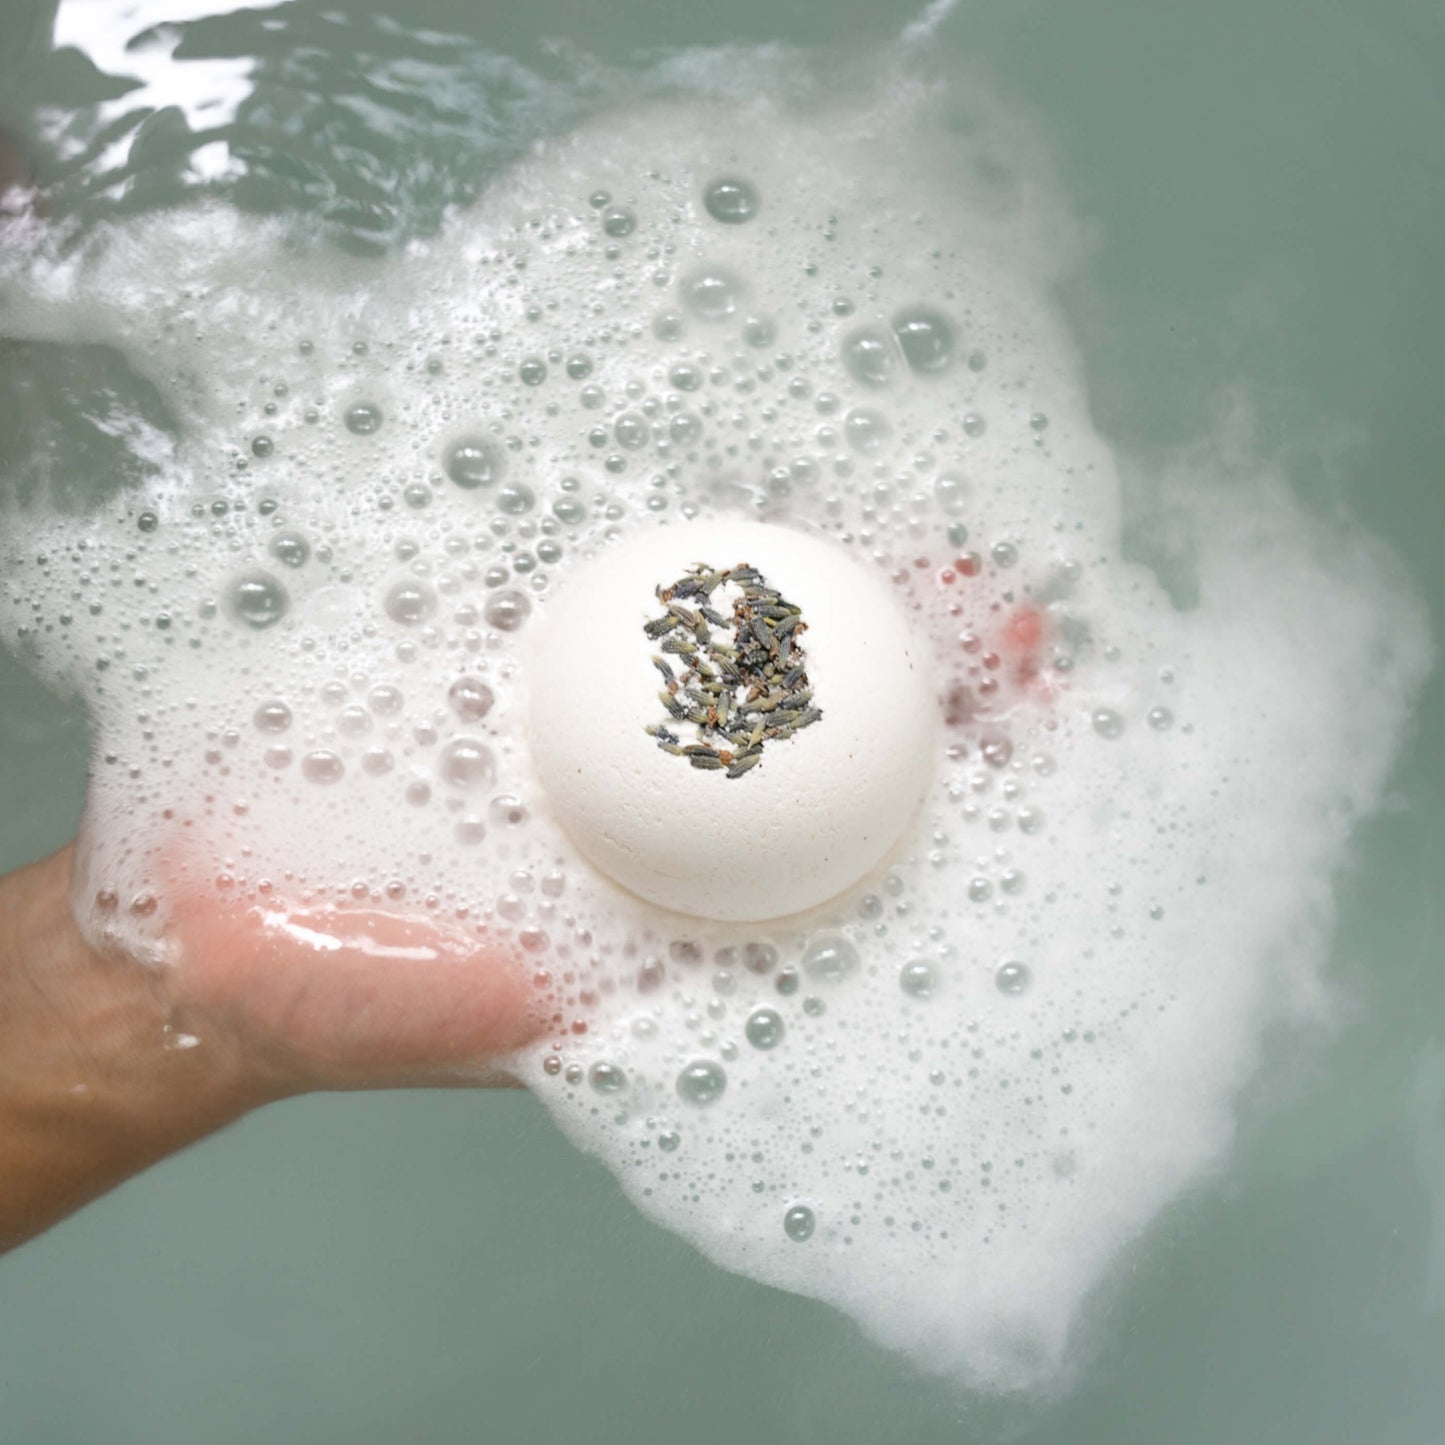 Hands holding the Zen bath bomb as it foams in a tub  of water